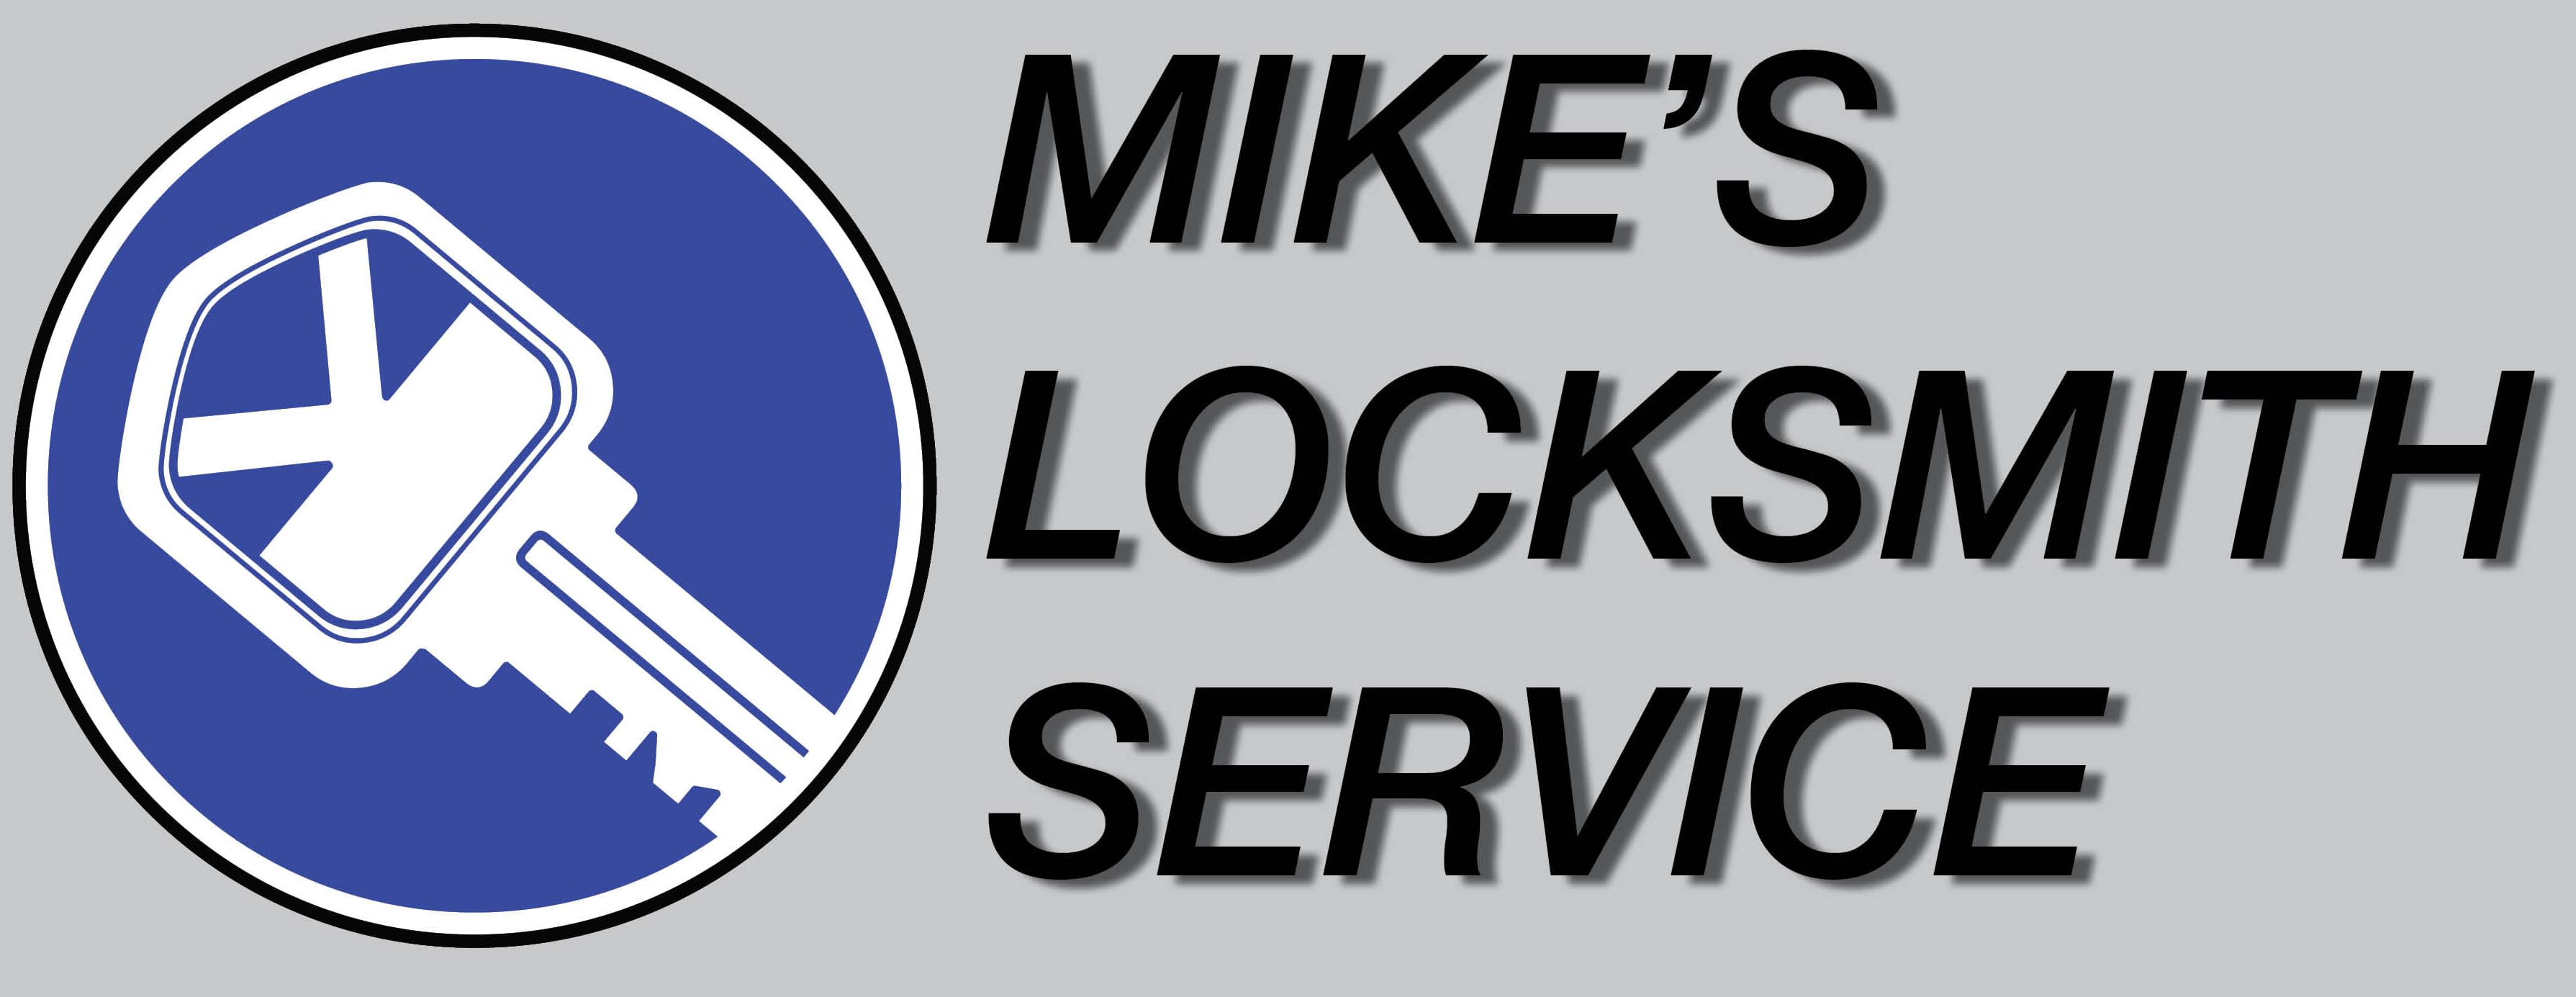 Mike's Locksmith Service